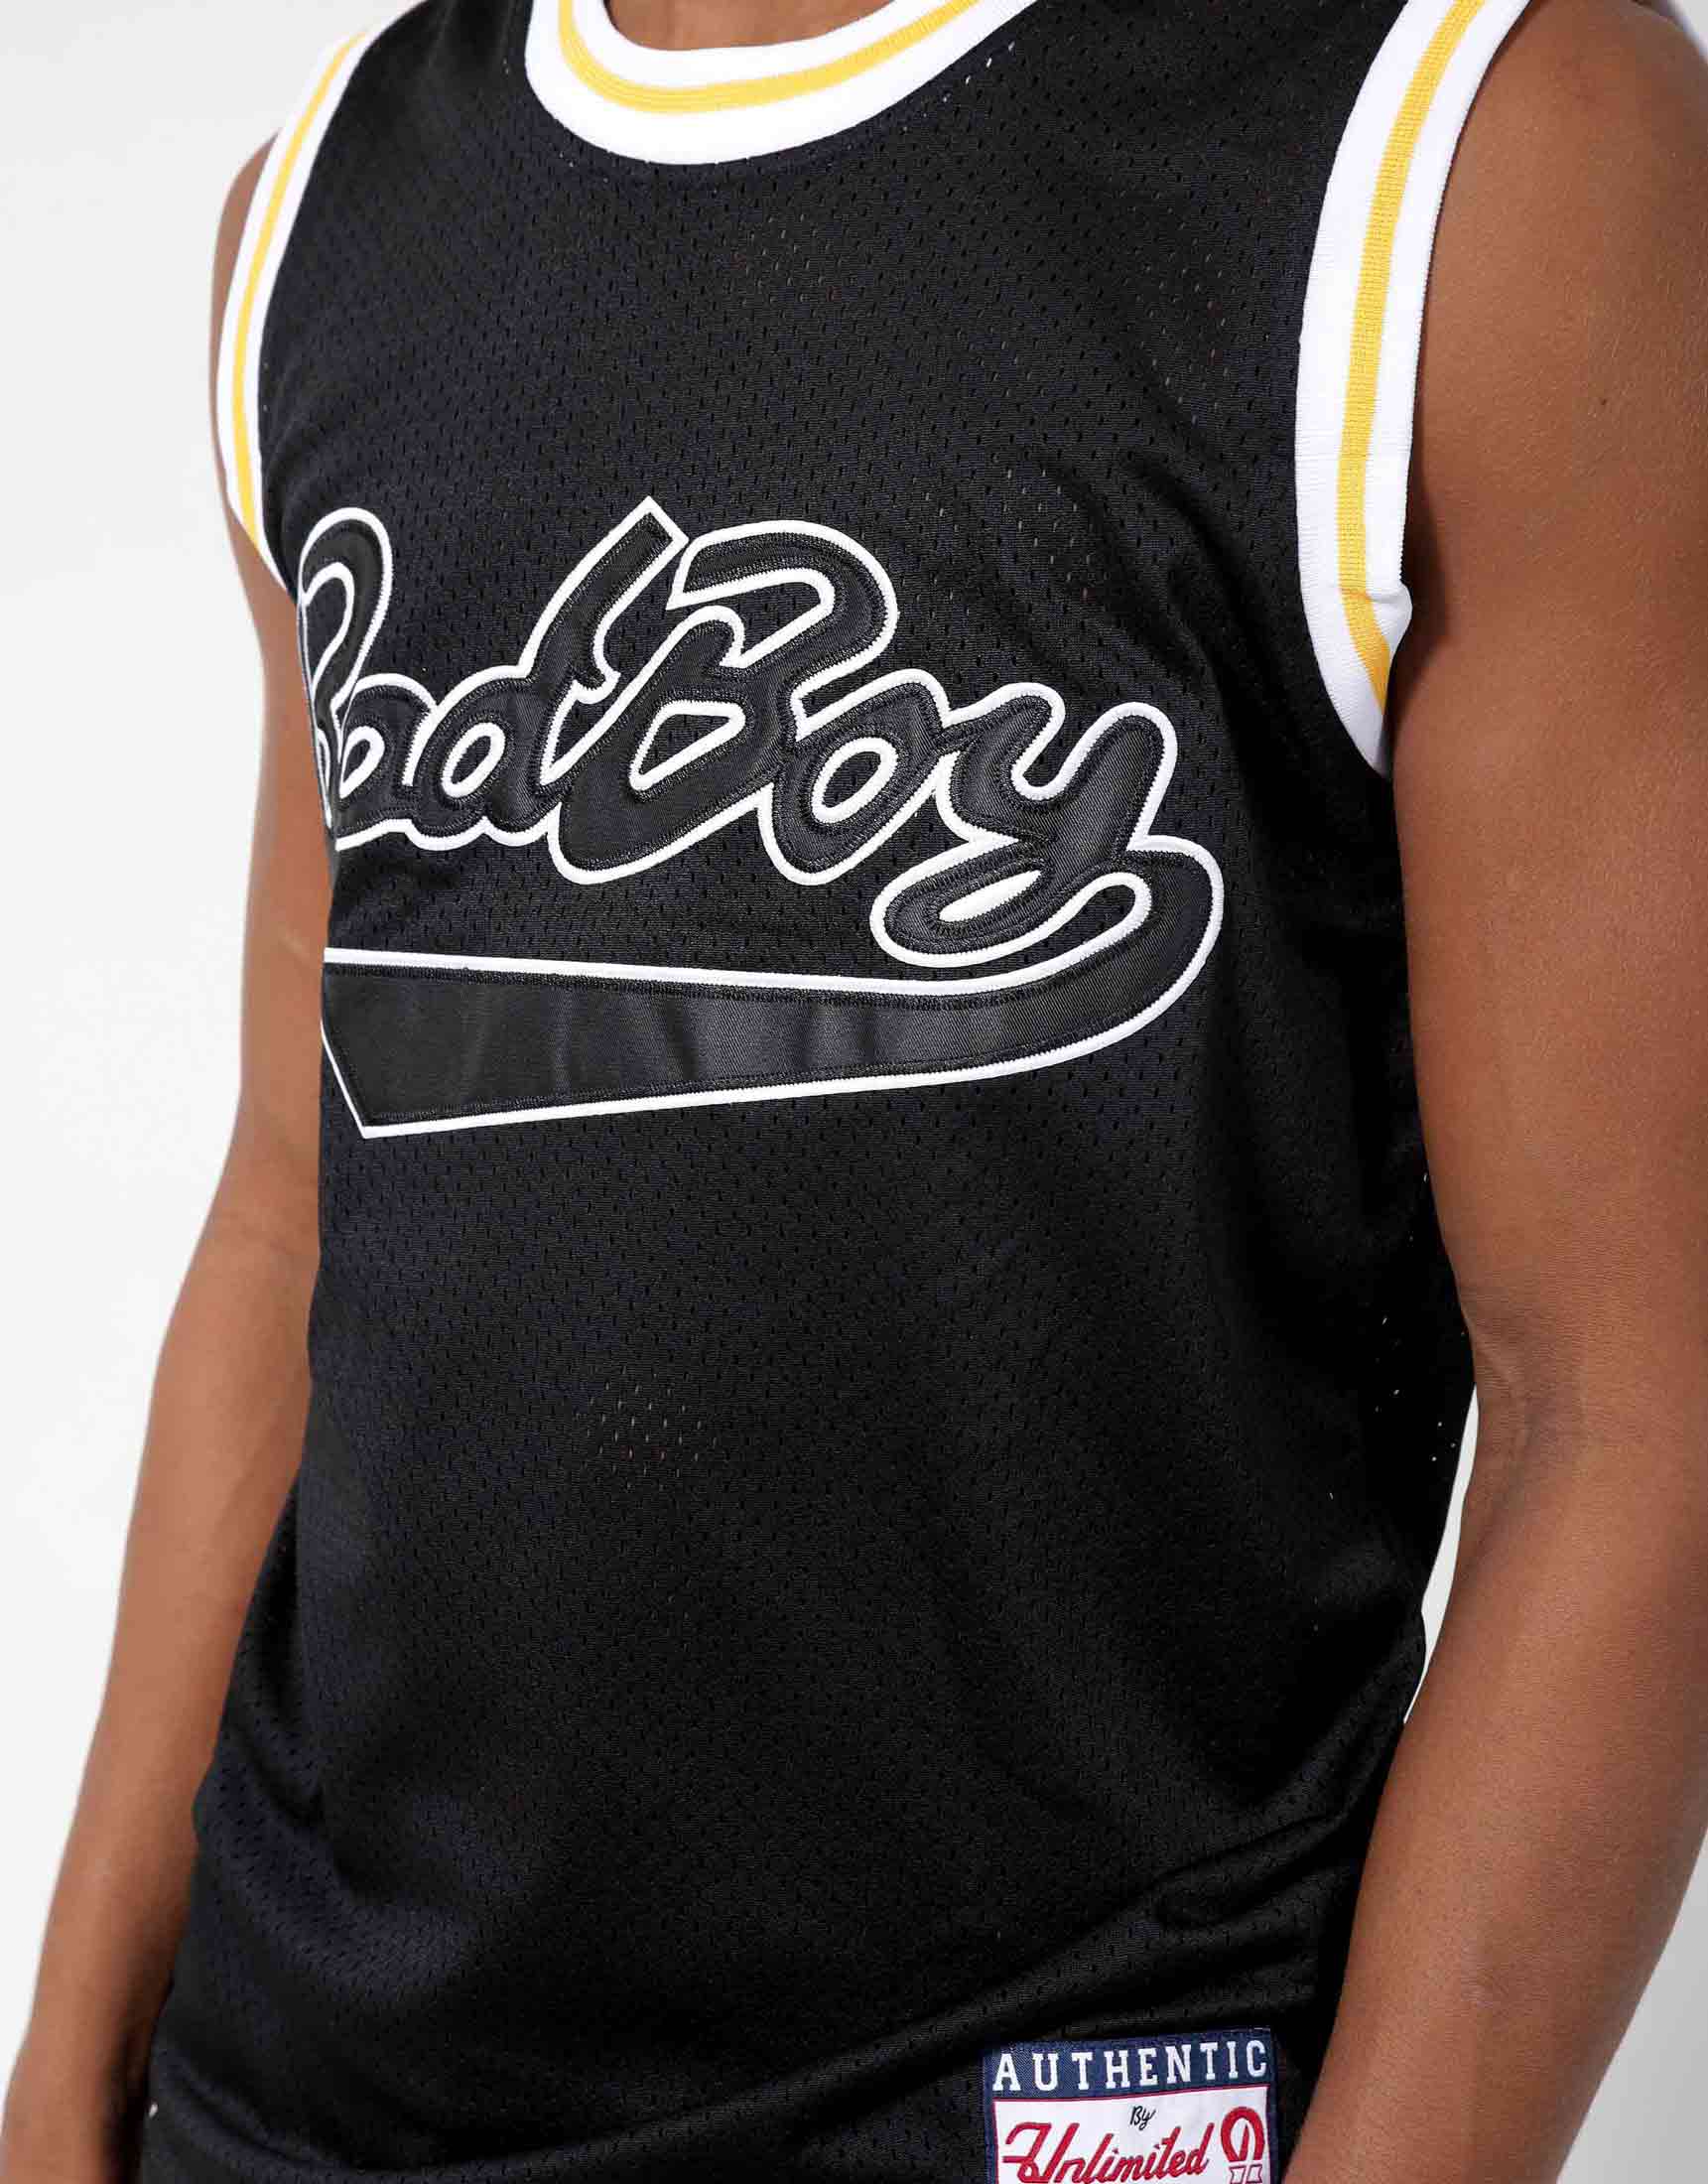 Biggie Badboy Camo Basketball Jersey - Top Smart Design